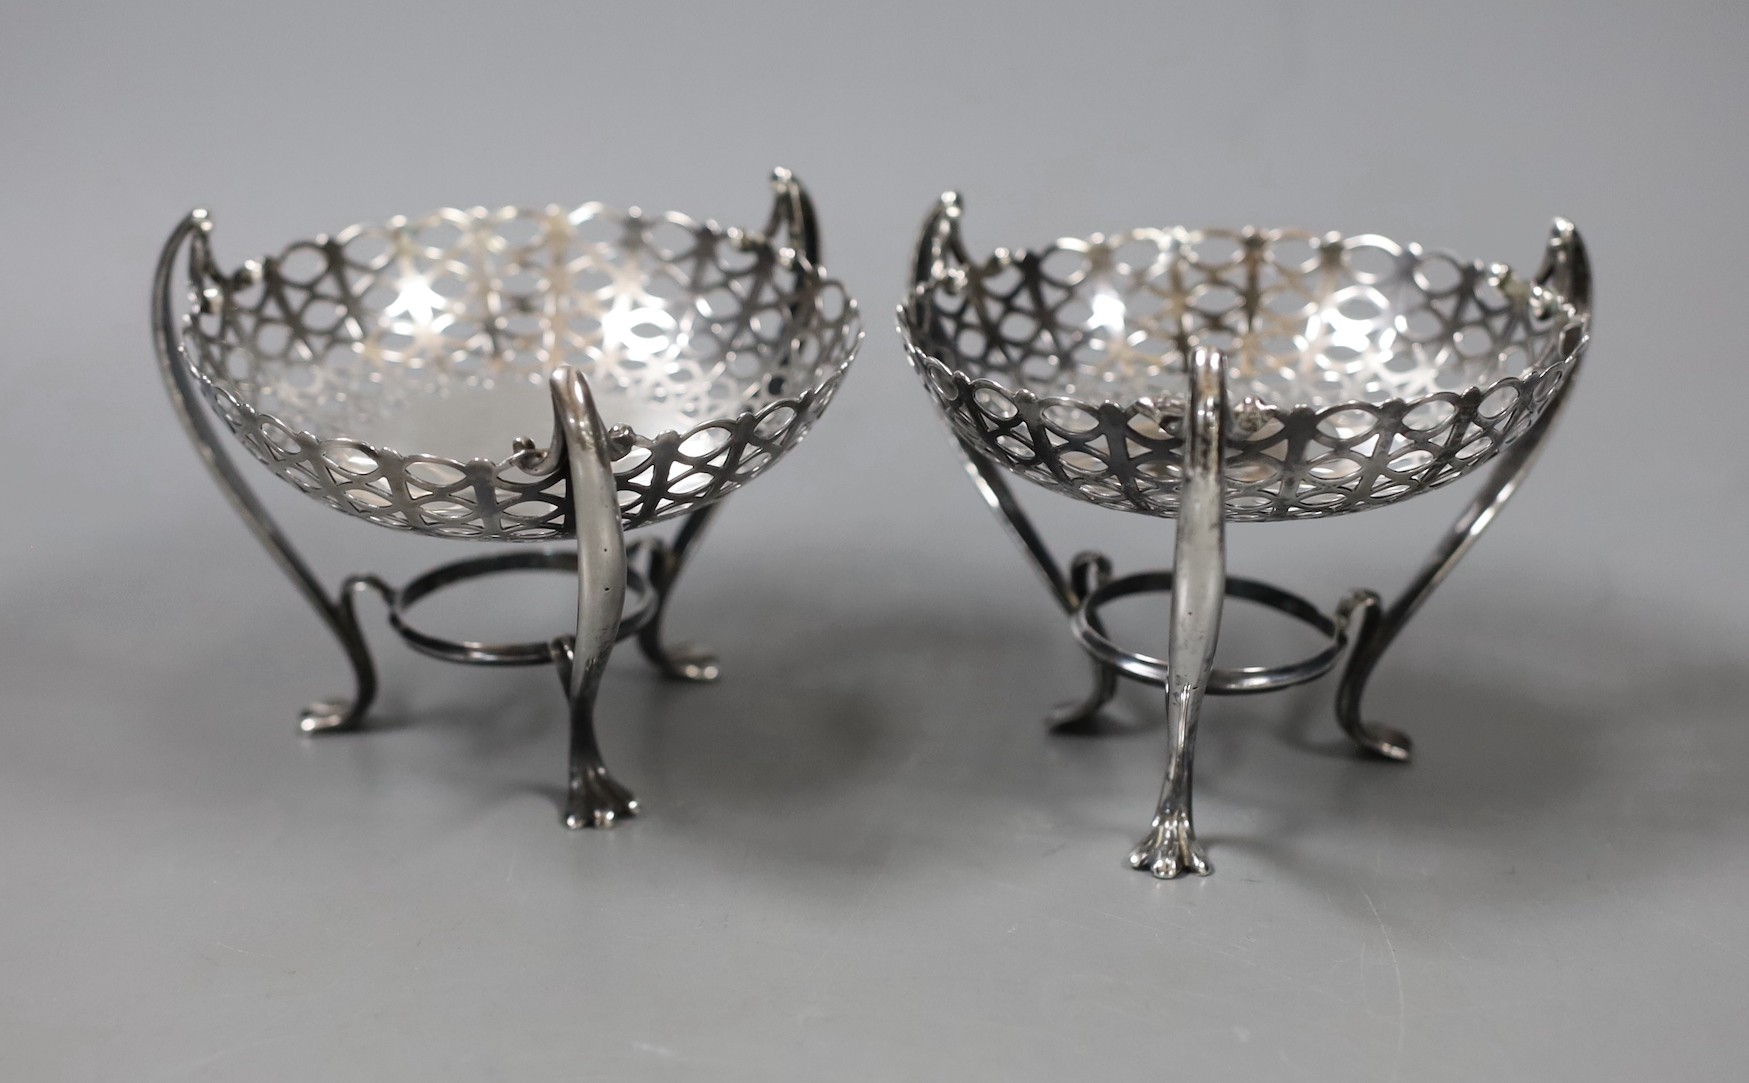 A pair of Edwardian pierced silver bon bon dishes, on raised tripod supports, E.S. Barnsley & Co, Birmingham, 1906, height 81mm, 5.8oz.